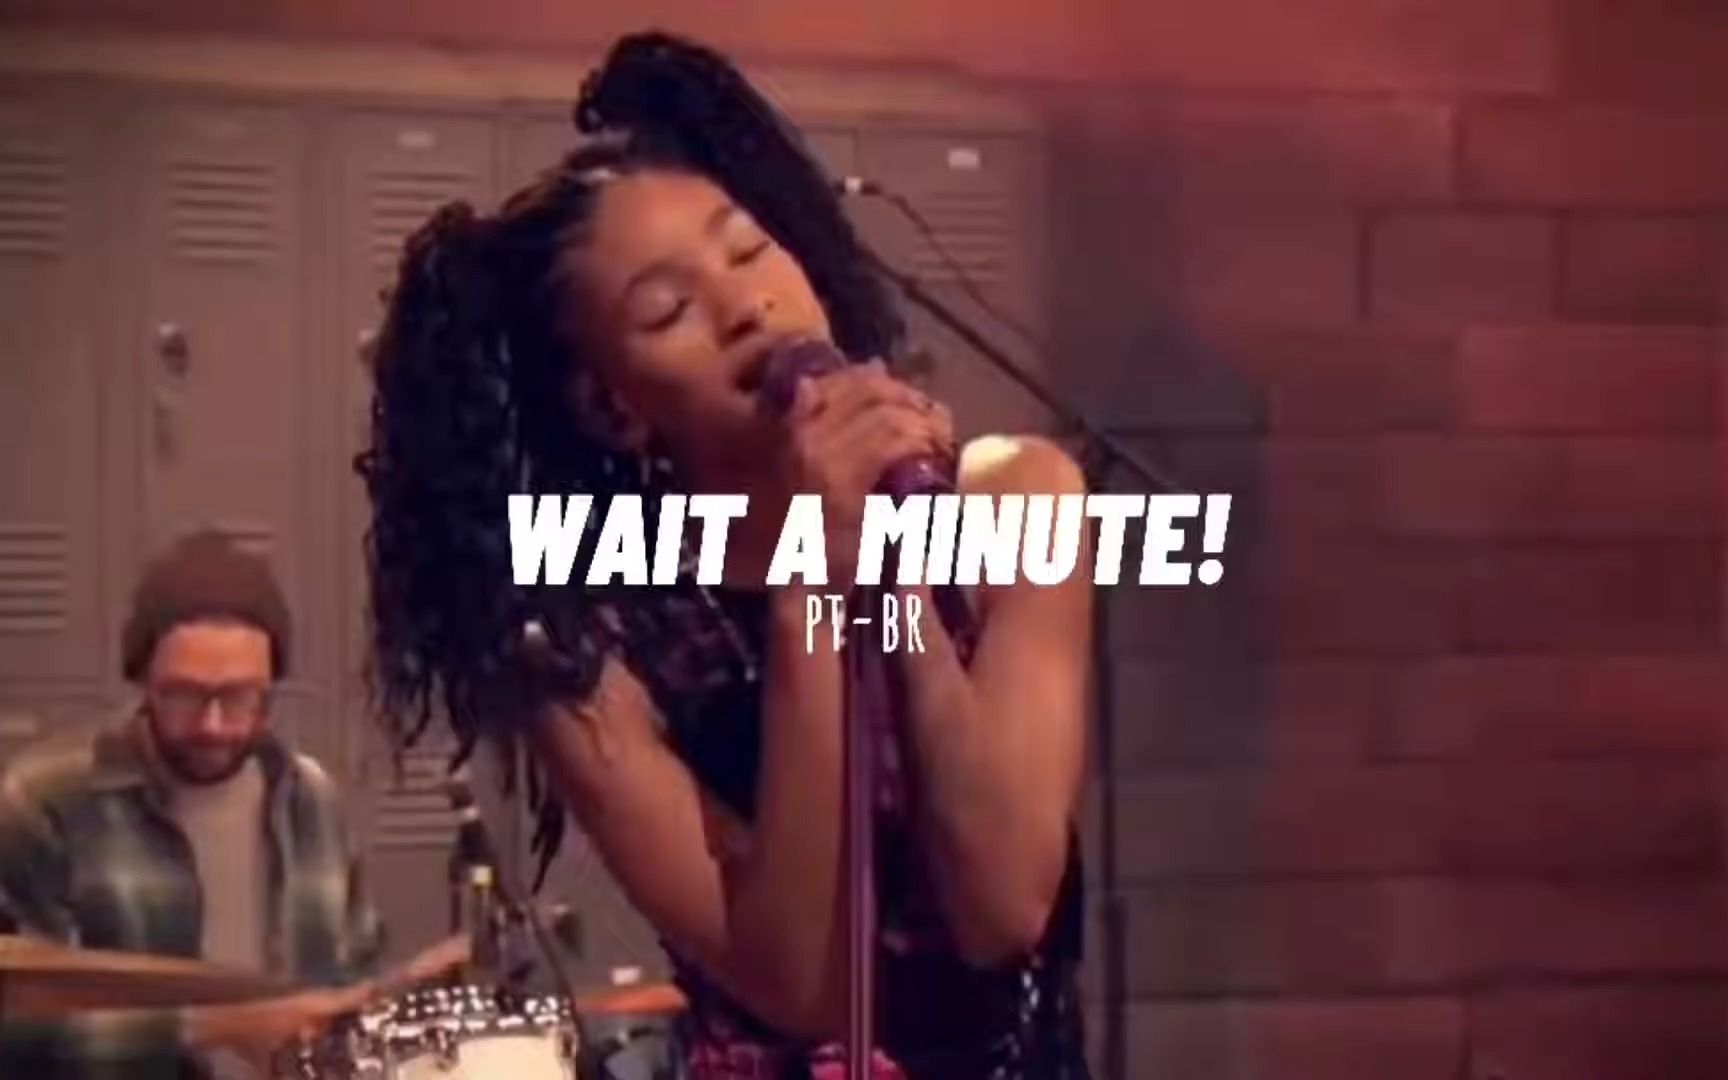 【WILLOW】威尔史密斯女儿演唱热单《Wait a Minute!》，这嗓音太绝了！